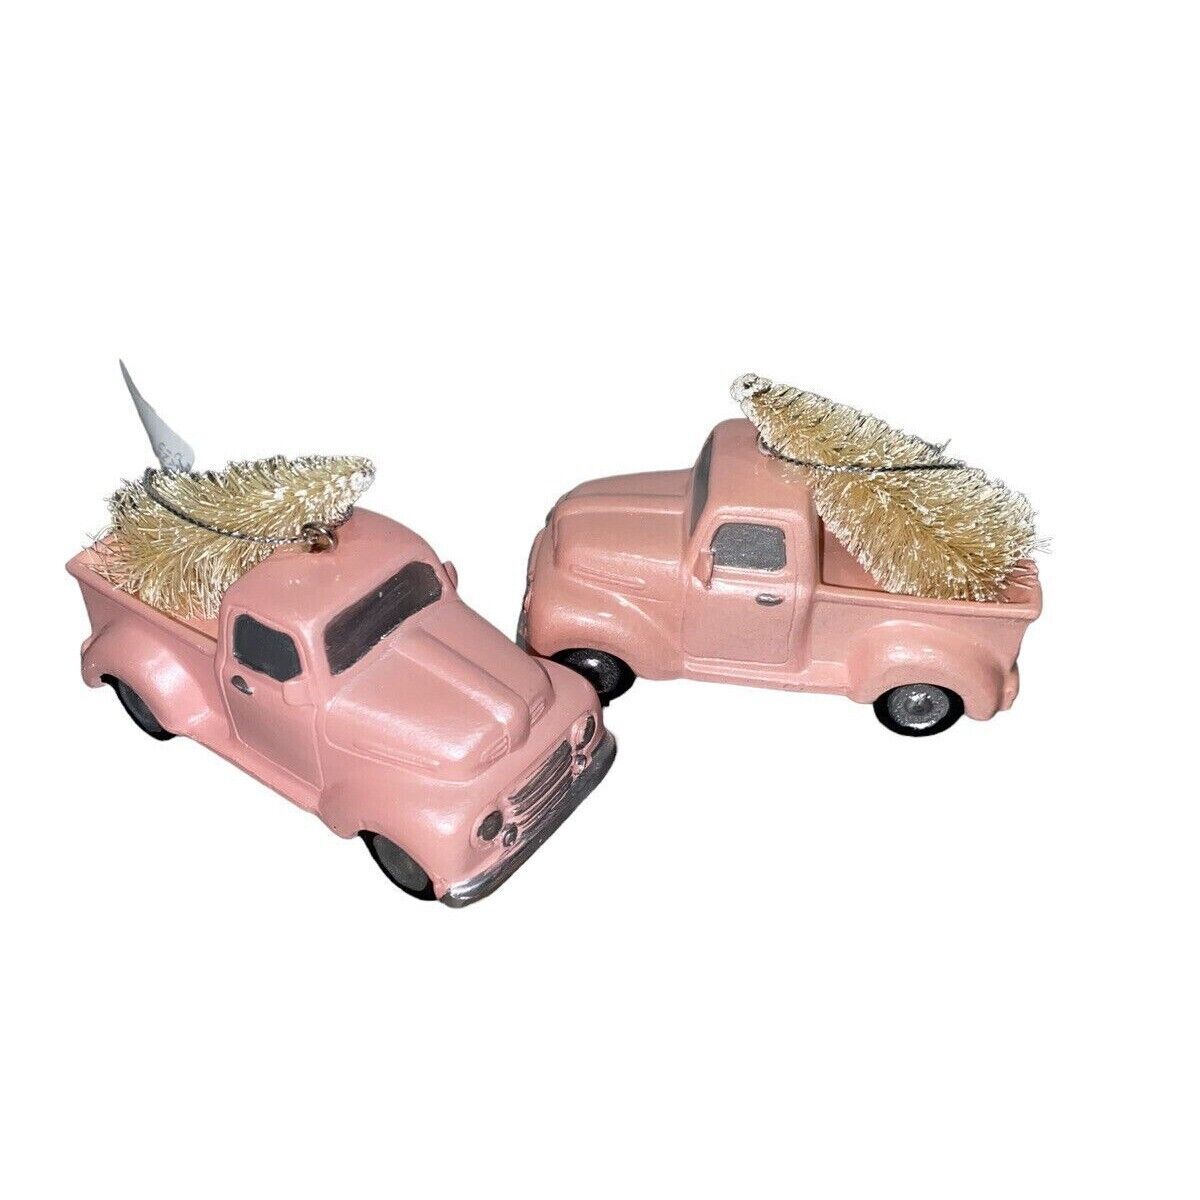 2 Wondershop Christmas Ornaments Pastel Pink Truck Carrying Trees NWT